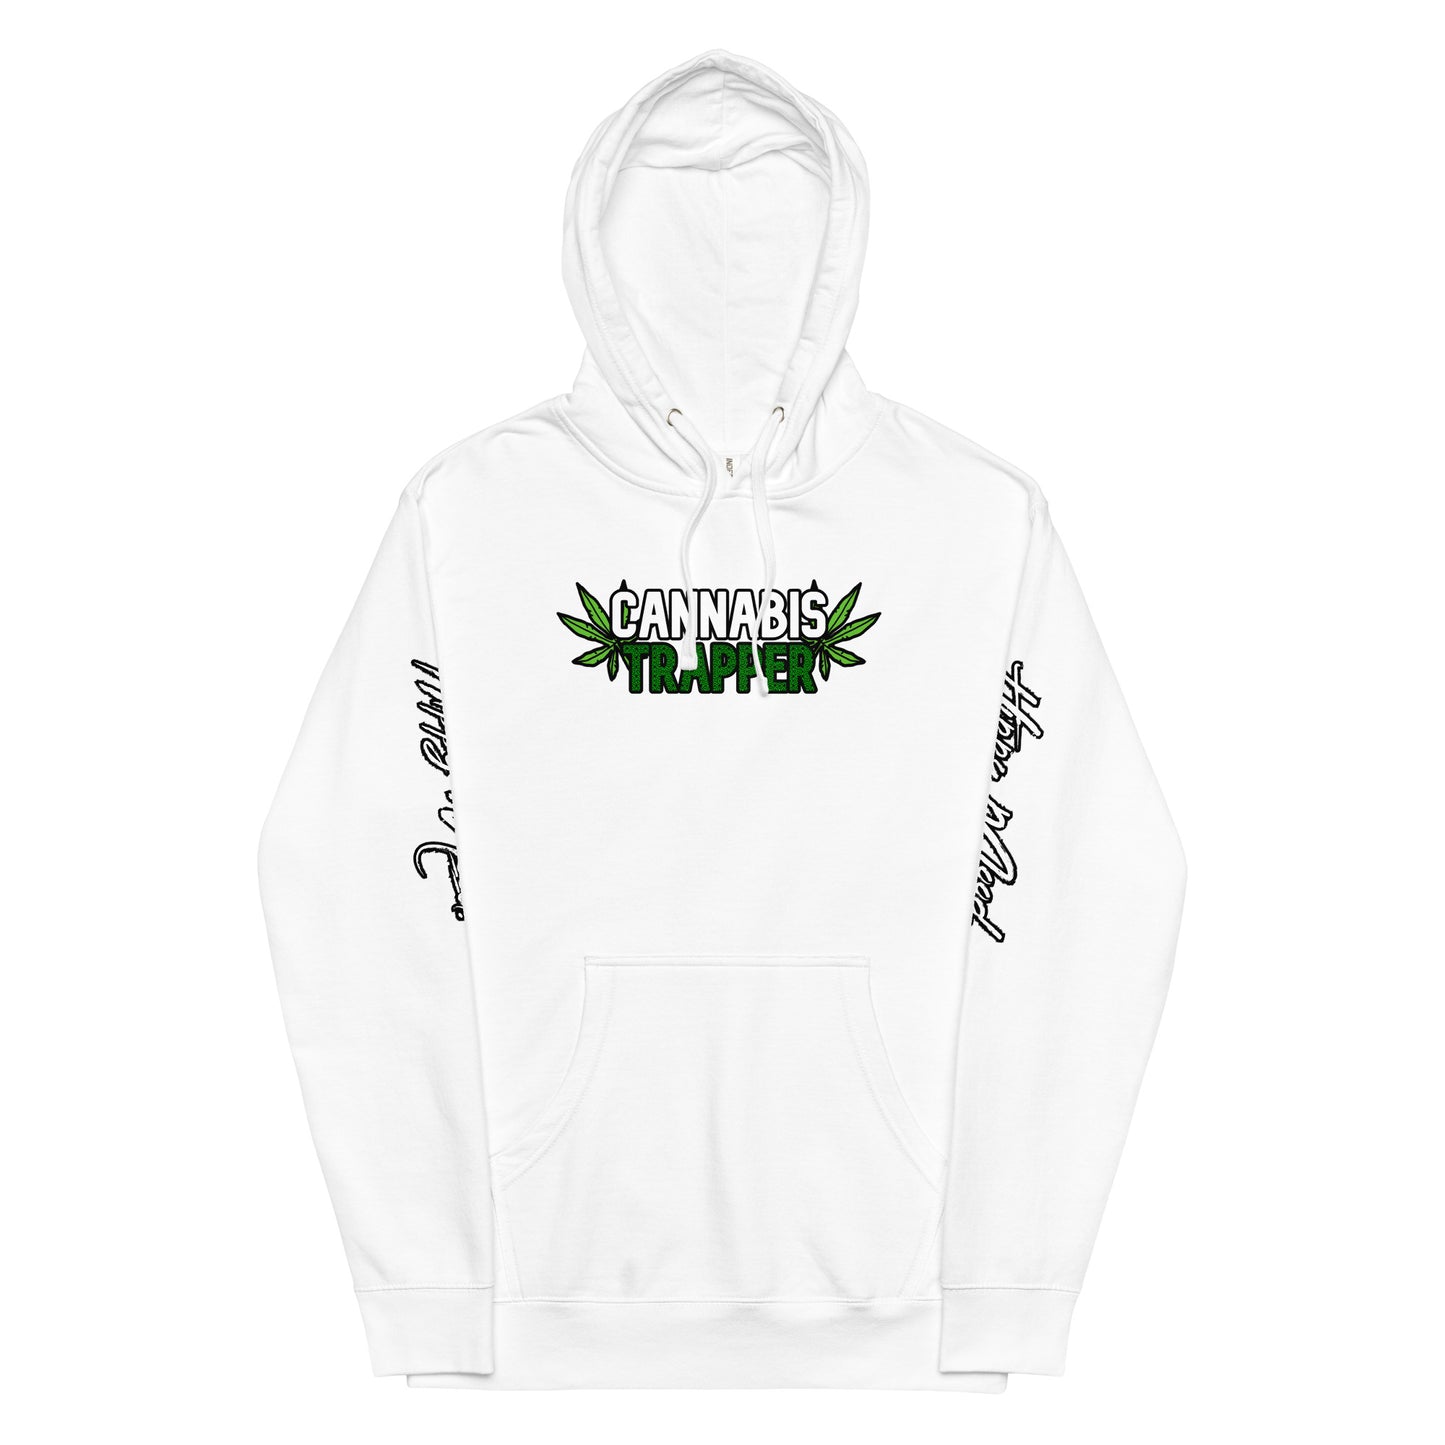 Cannabis Trapper | Unisex midweight hoodie